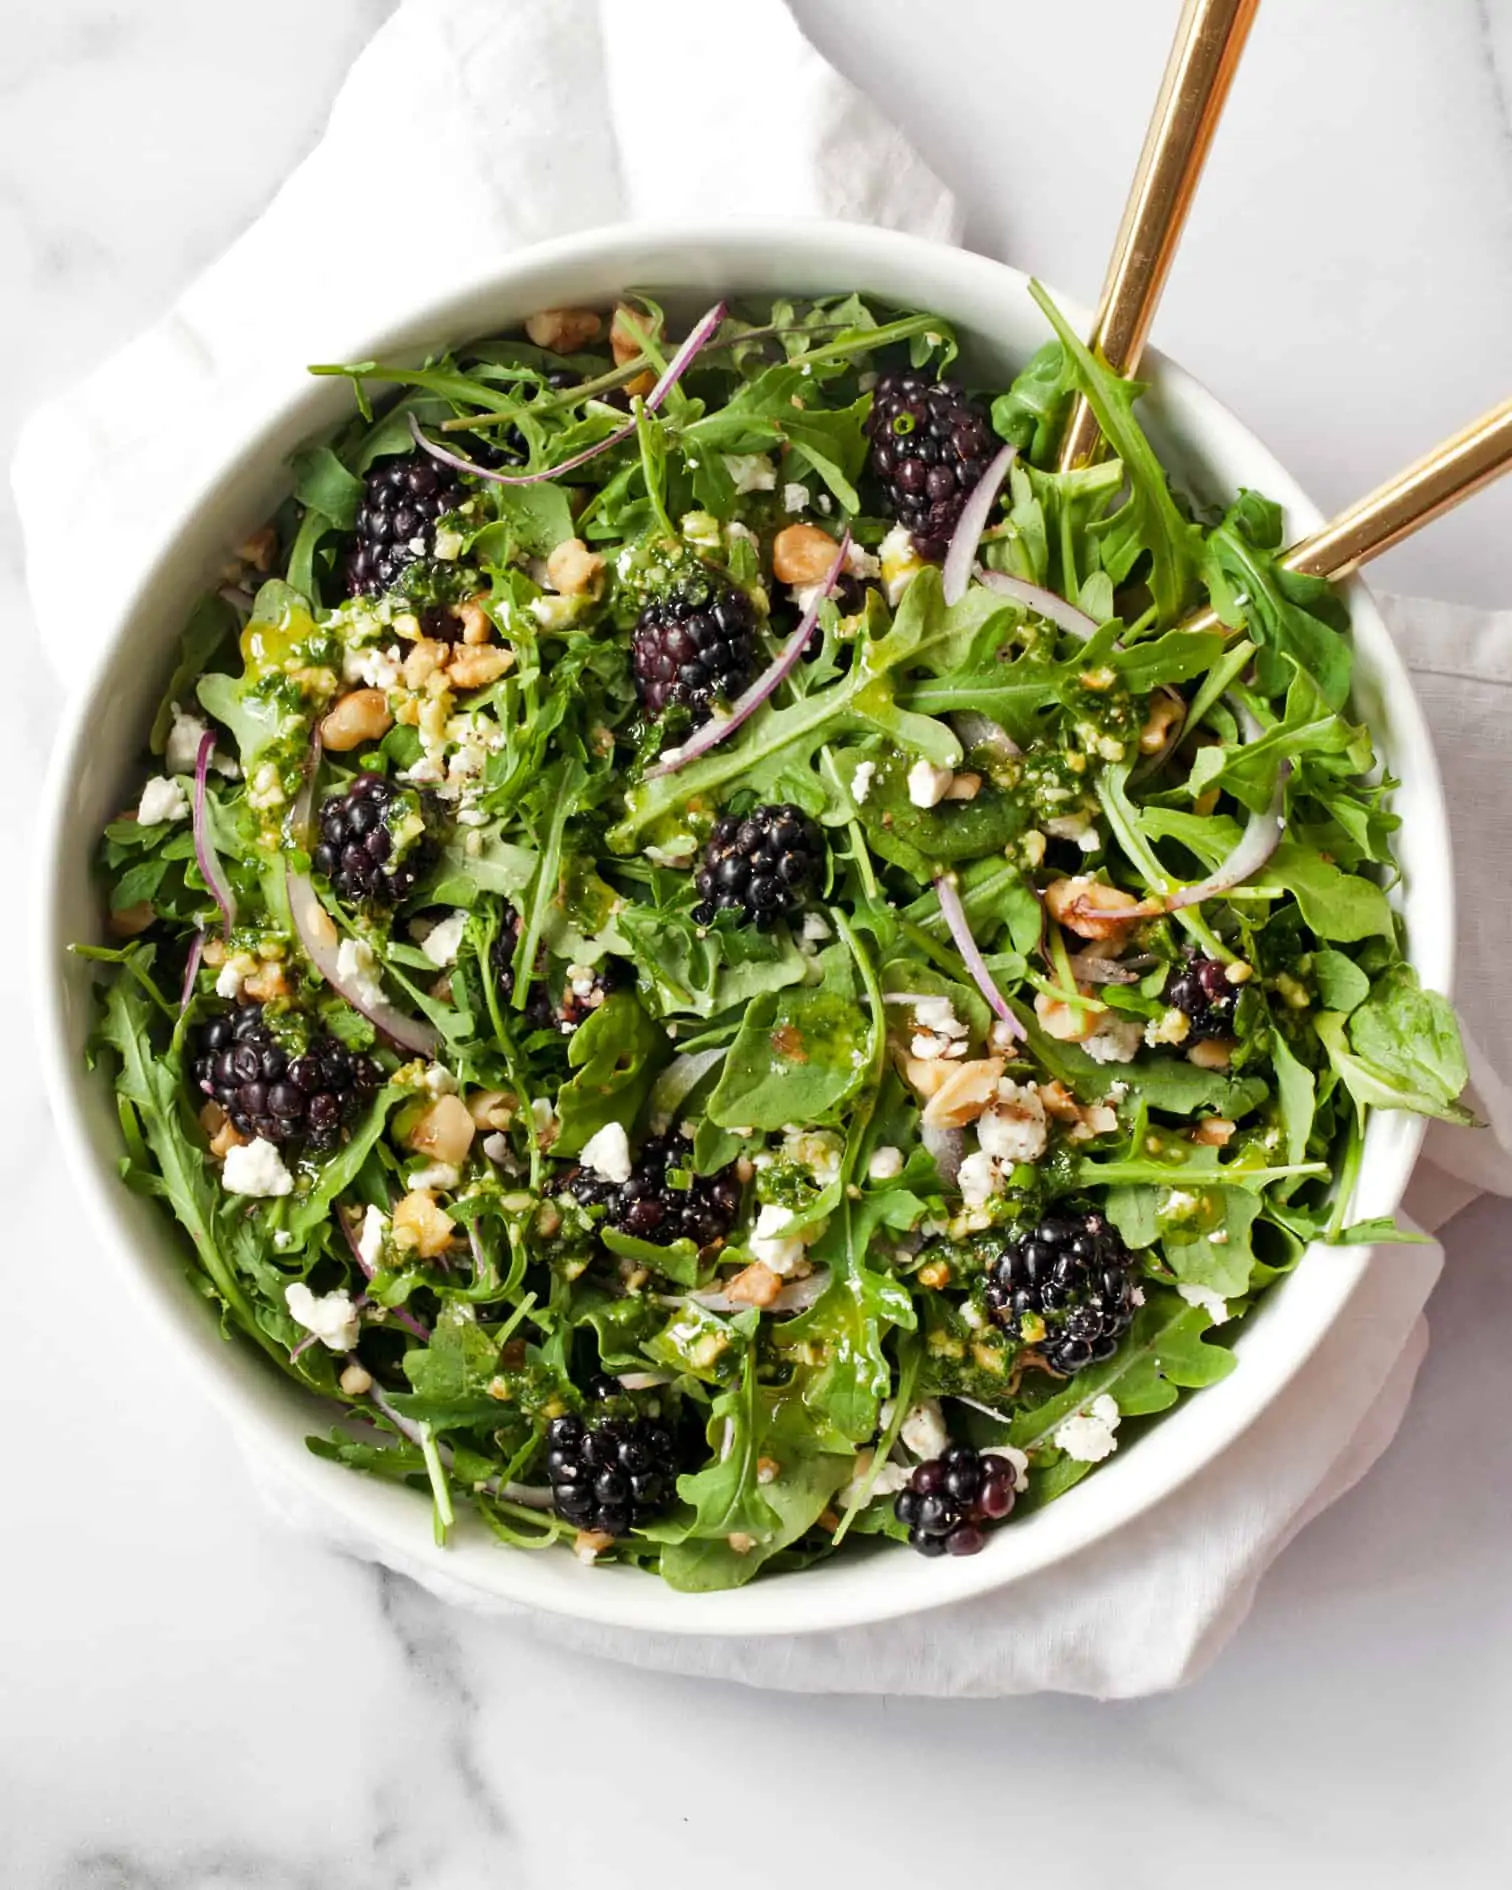 Blackberry Salad with Basil Pesto Vinaigrette